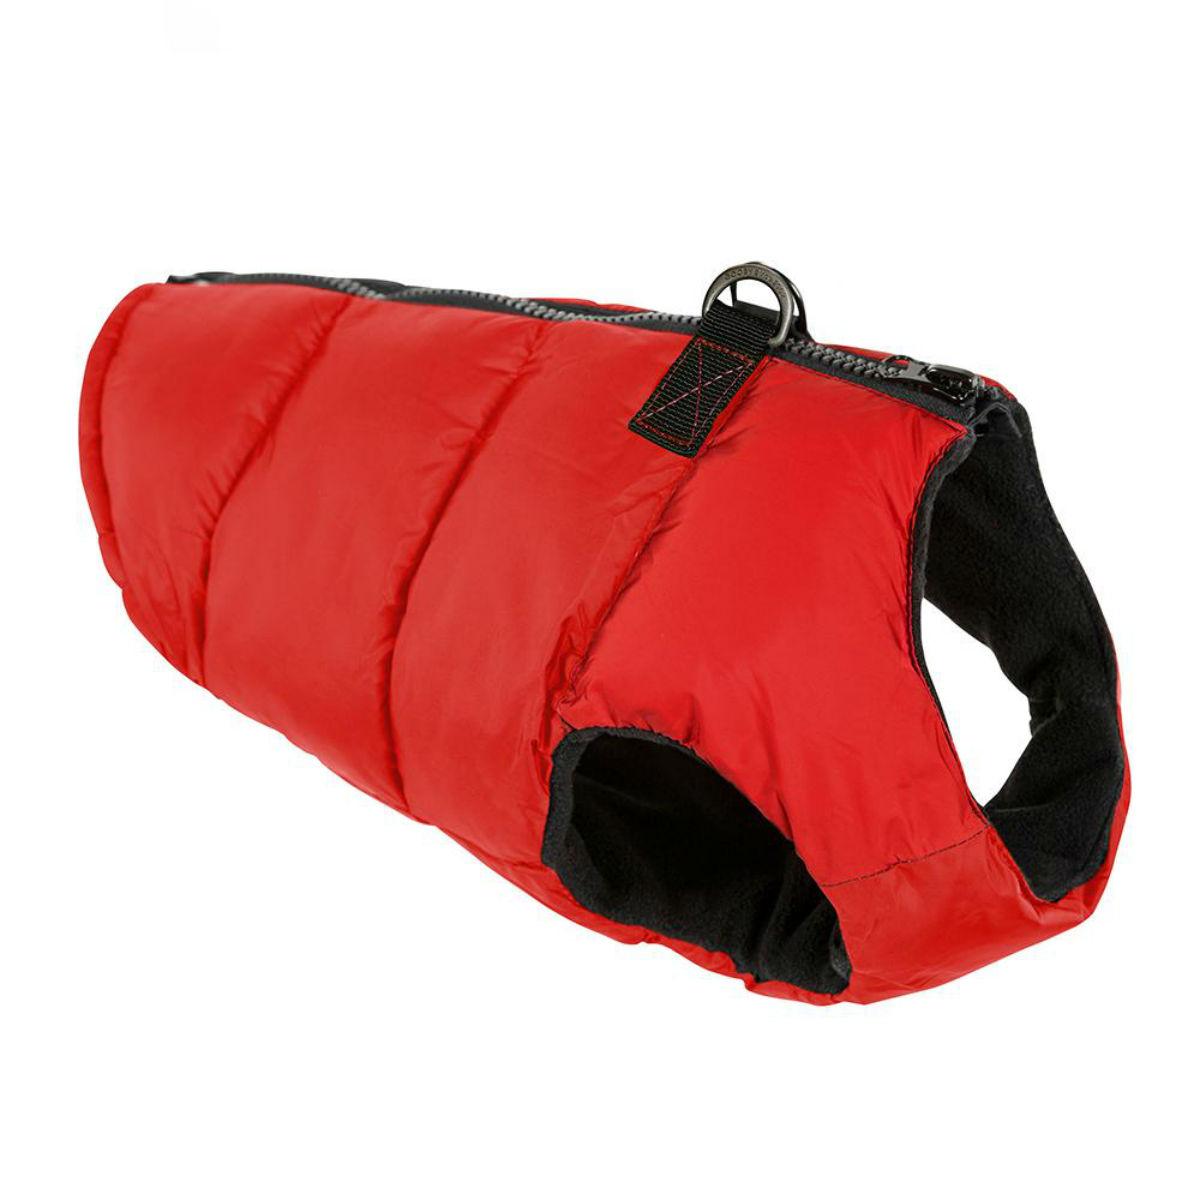 Gooby Padded Dog Vest - Red